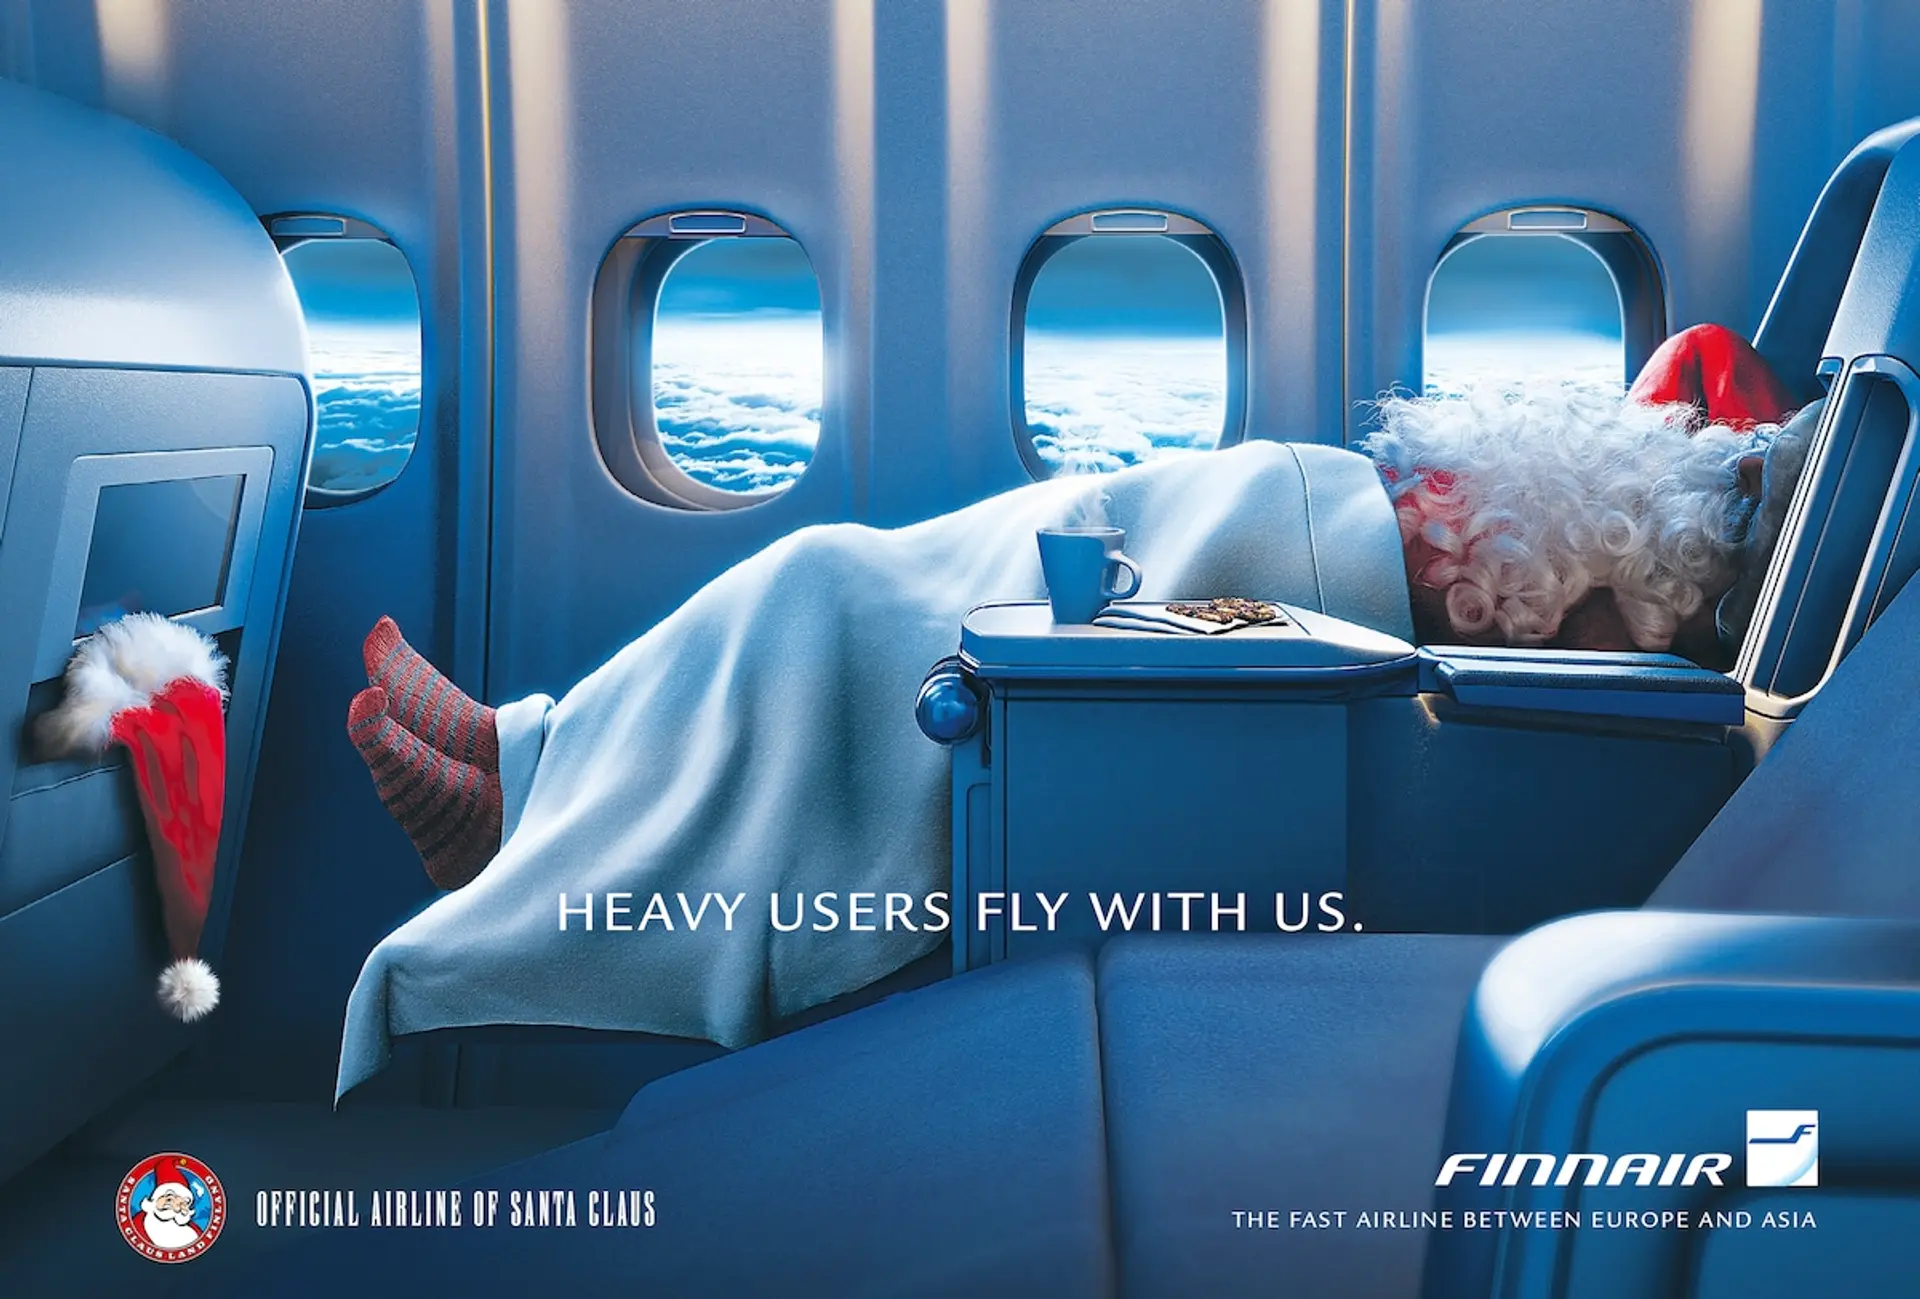 Airlines News - Meet Santa virtually this year with Finnair